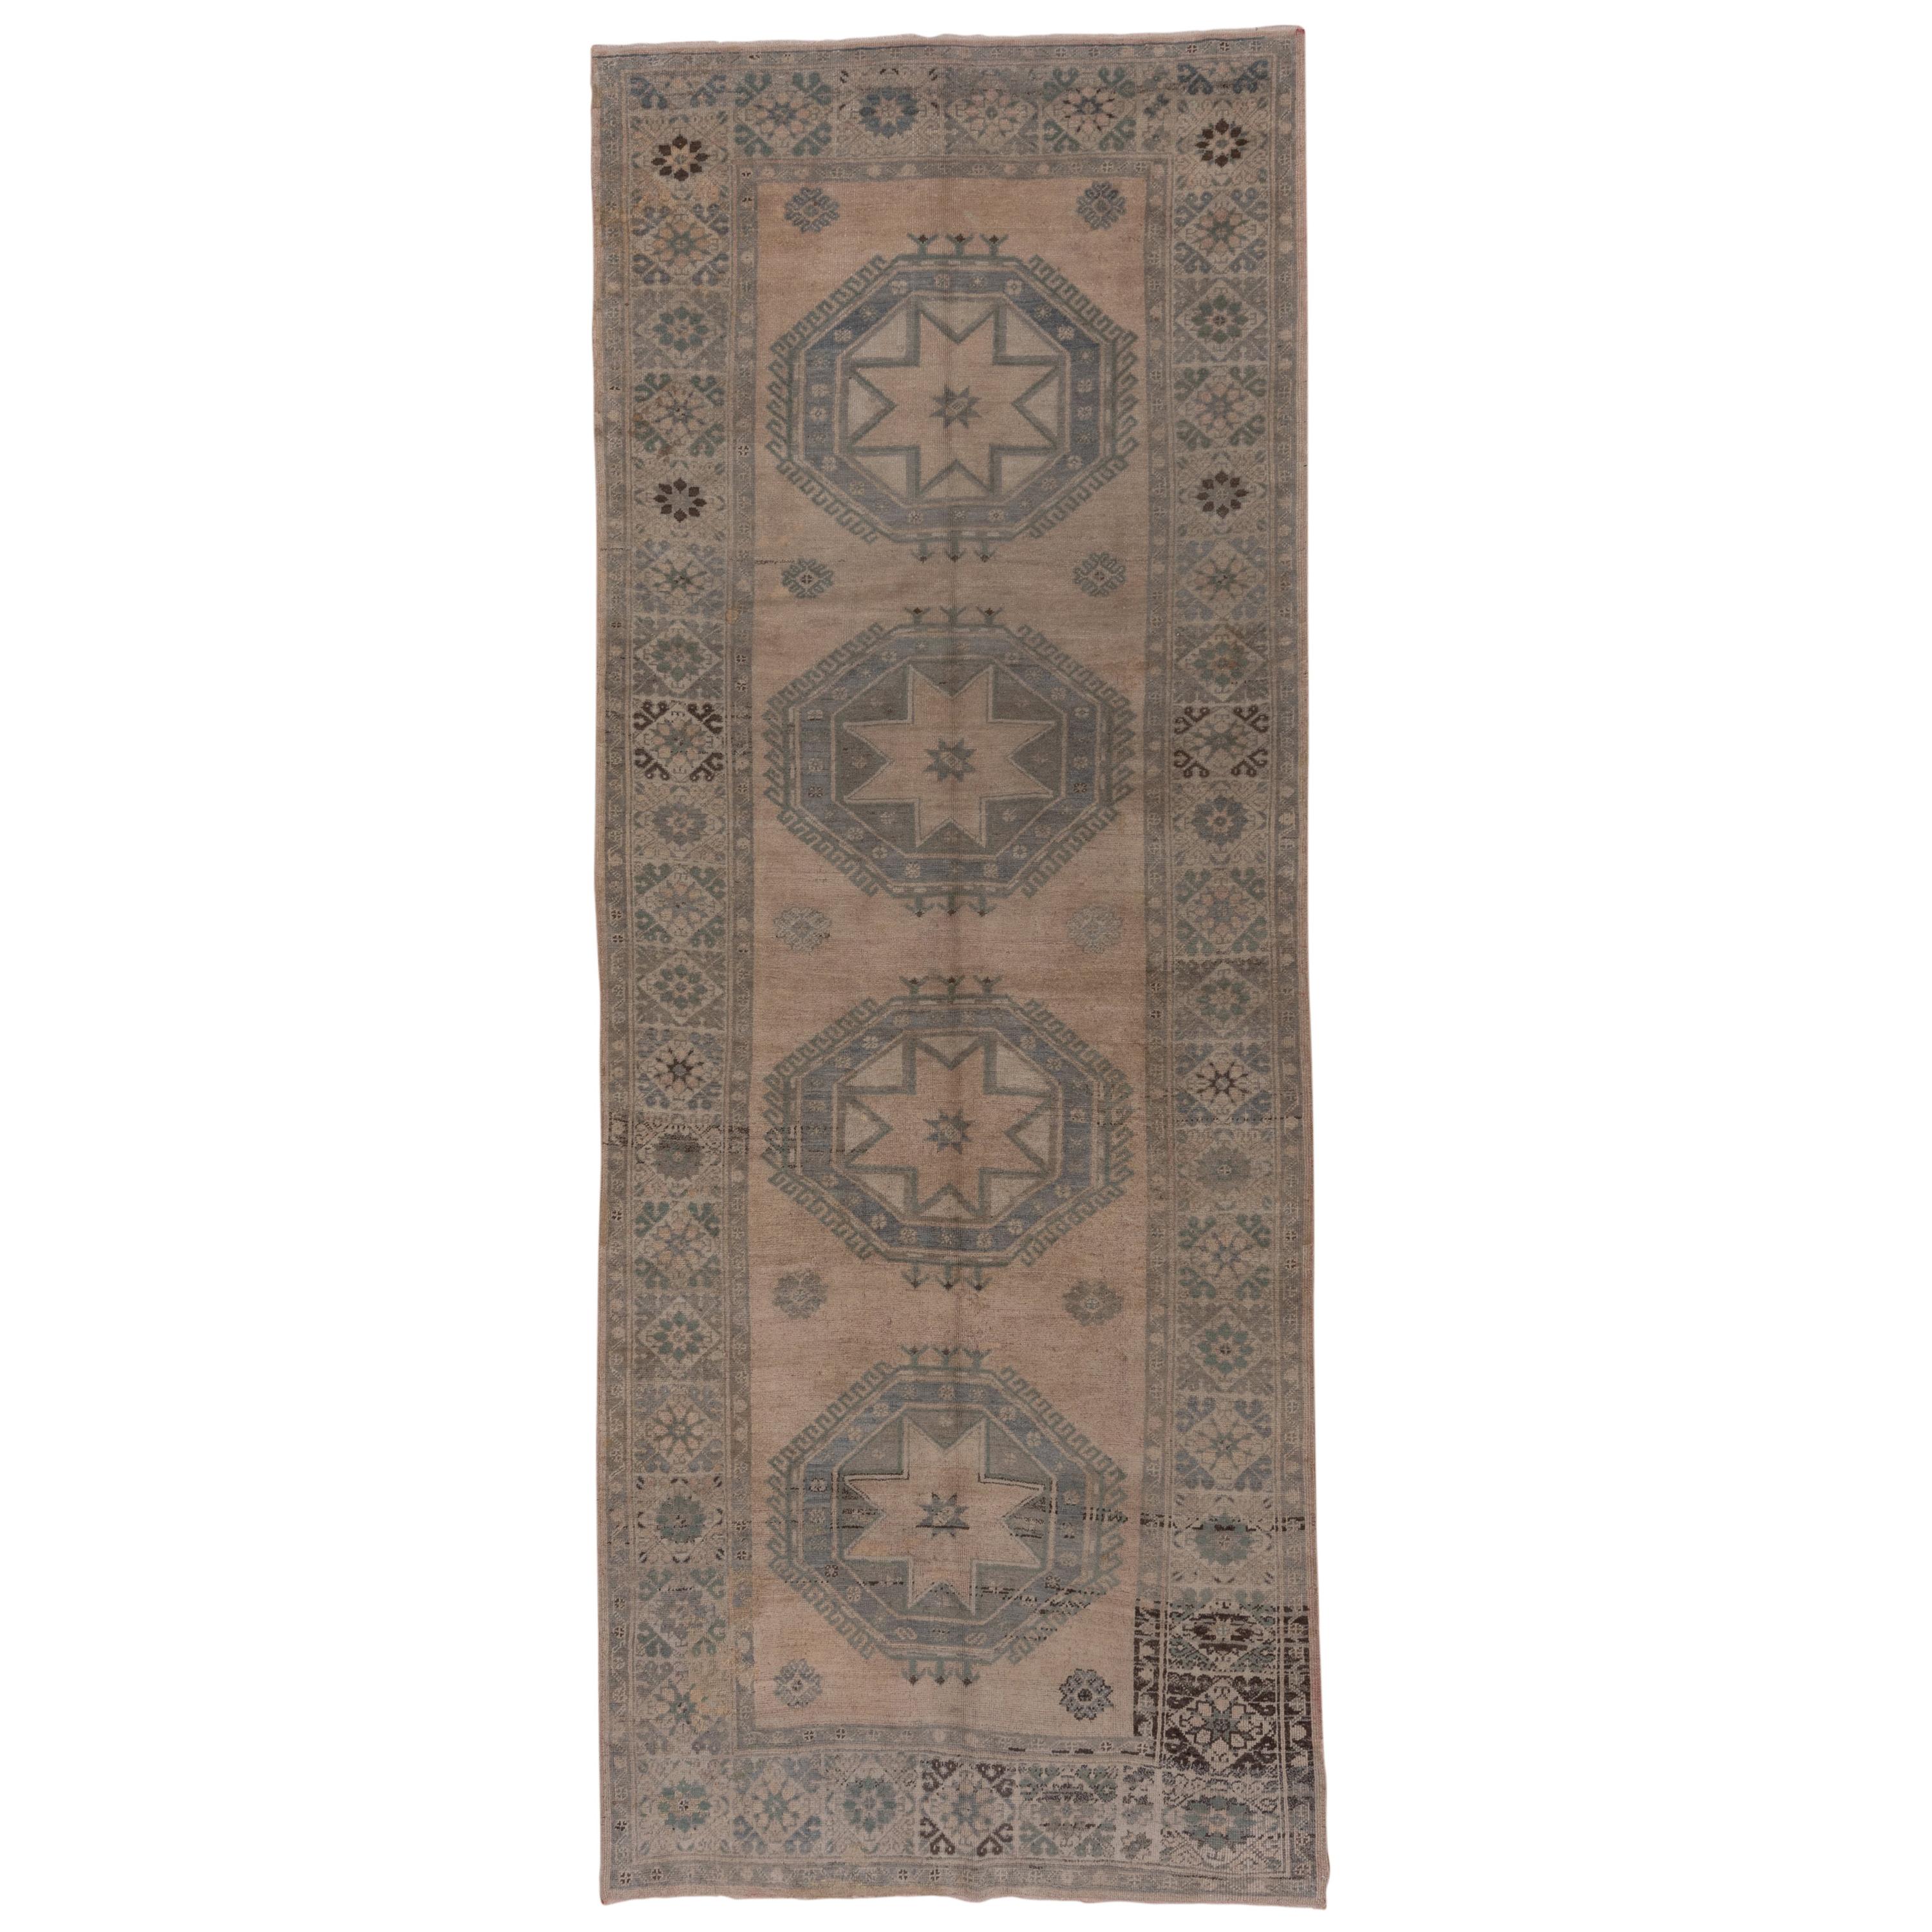 Antique Turkish Oushak Carpet, Circa 1930s